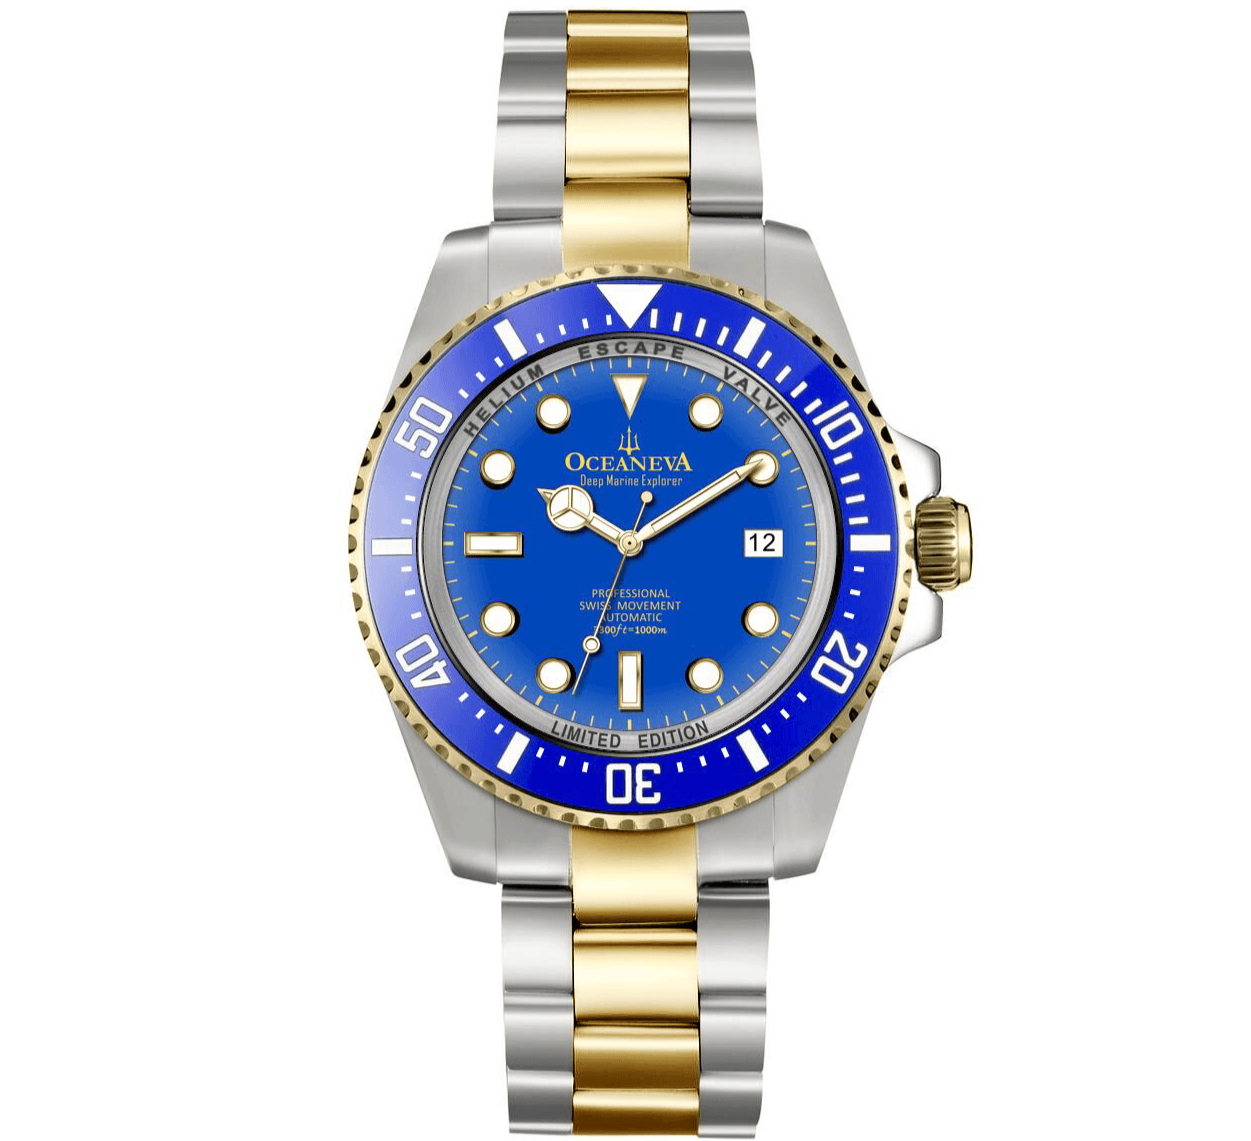 Oceaneva Men's Deep Marine Explorer 1000M Pro Diver Watch Blue and Gold - BL200BLSTGD 1000M, 1000m Dive watch, 316L Stainless Steel, BGW9 Swiss Super-Luminova, Ceramic Beze, Dive Watch, Sw200-1 Swiss Automatic Movement